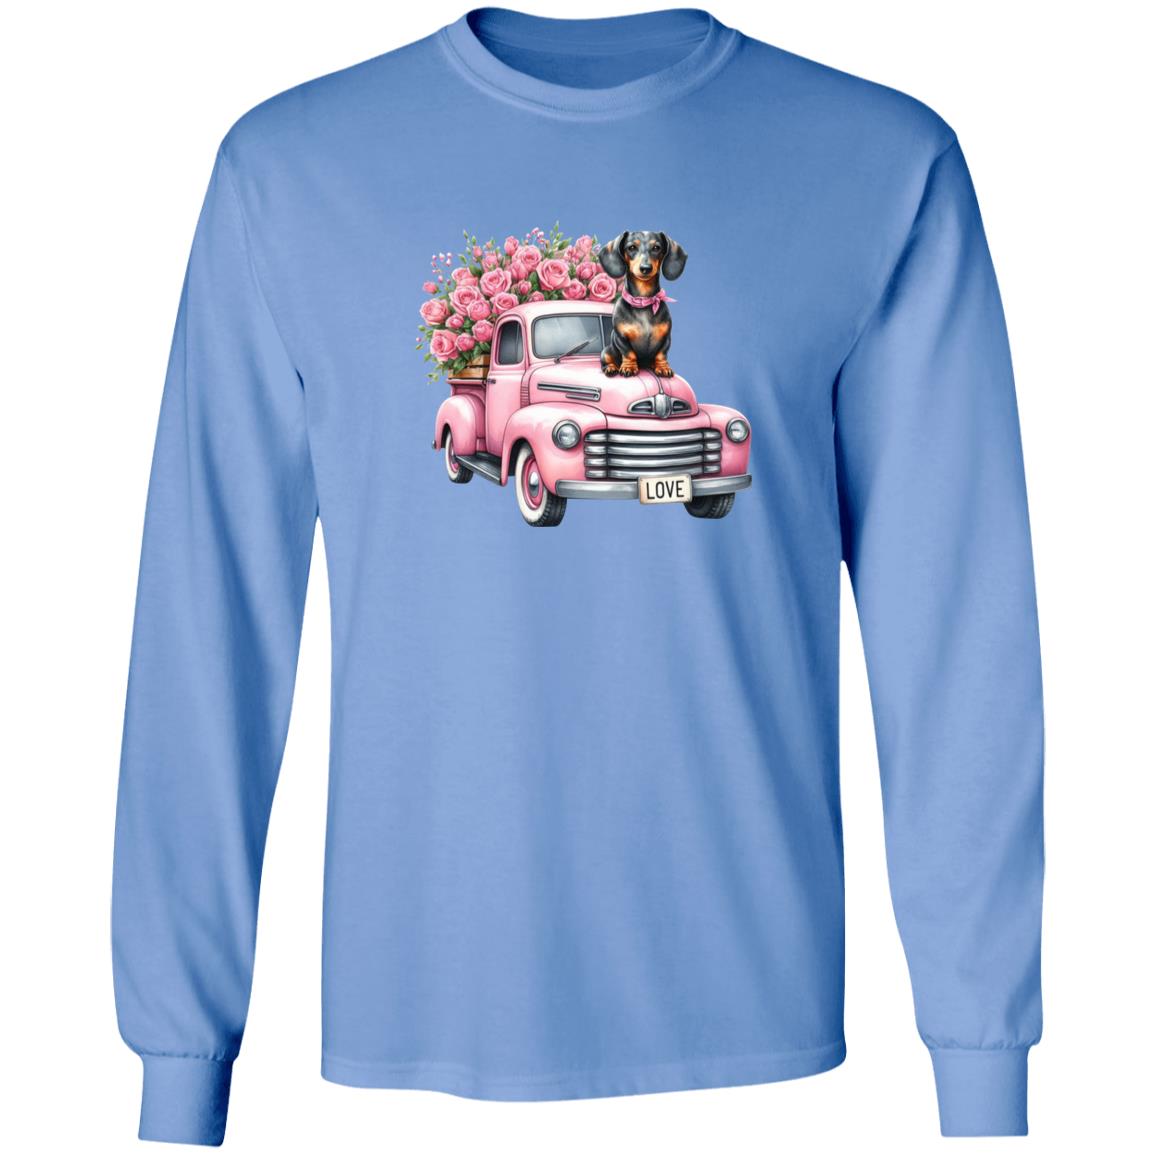 Dachshund Love Truck Long Sleeves + Sweatshirts